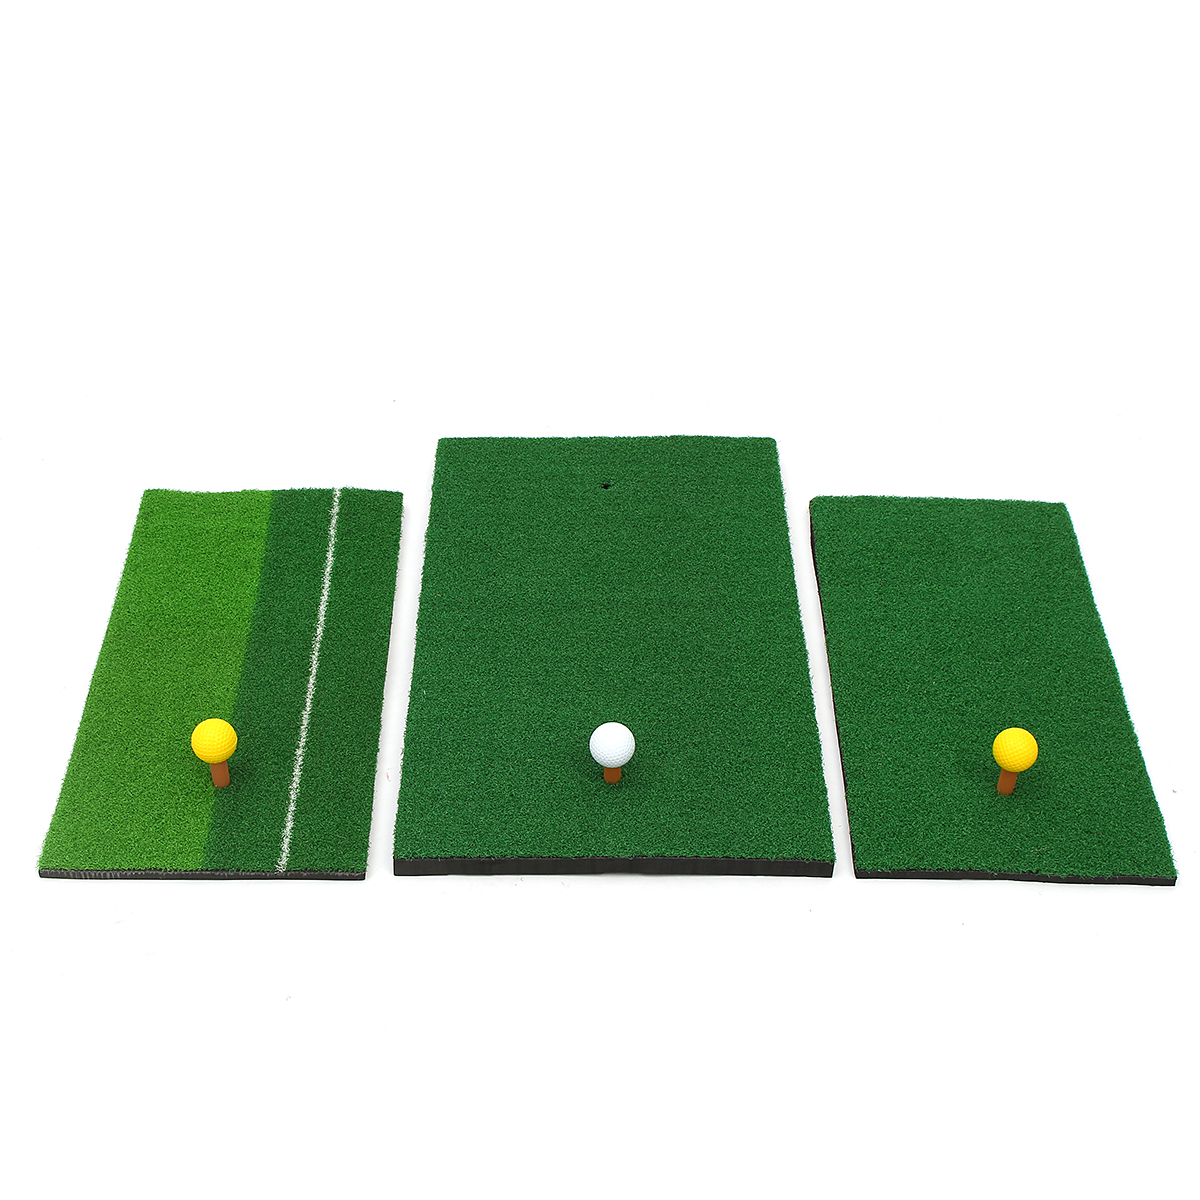 Golf-Putting-Training-Mats-Nylon-Turf-Chipping-Driving-Practice-Mat-Indoor-1191142-3